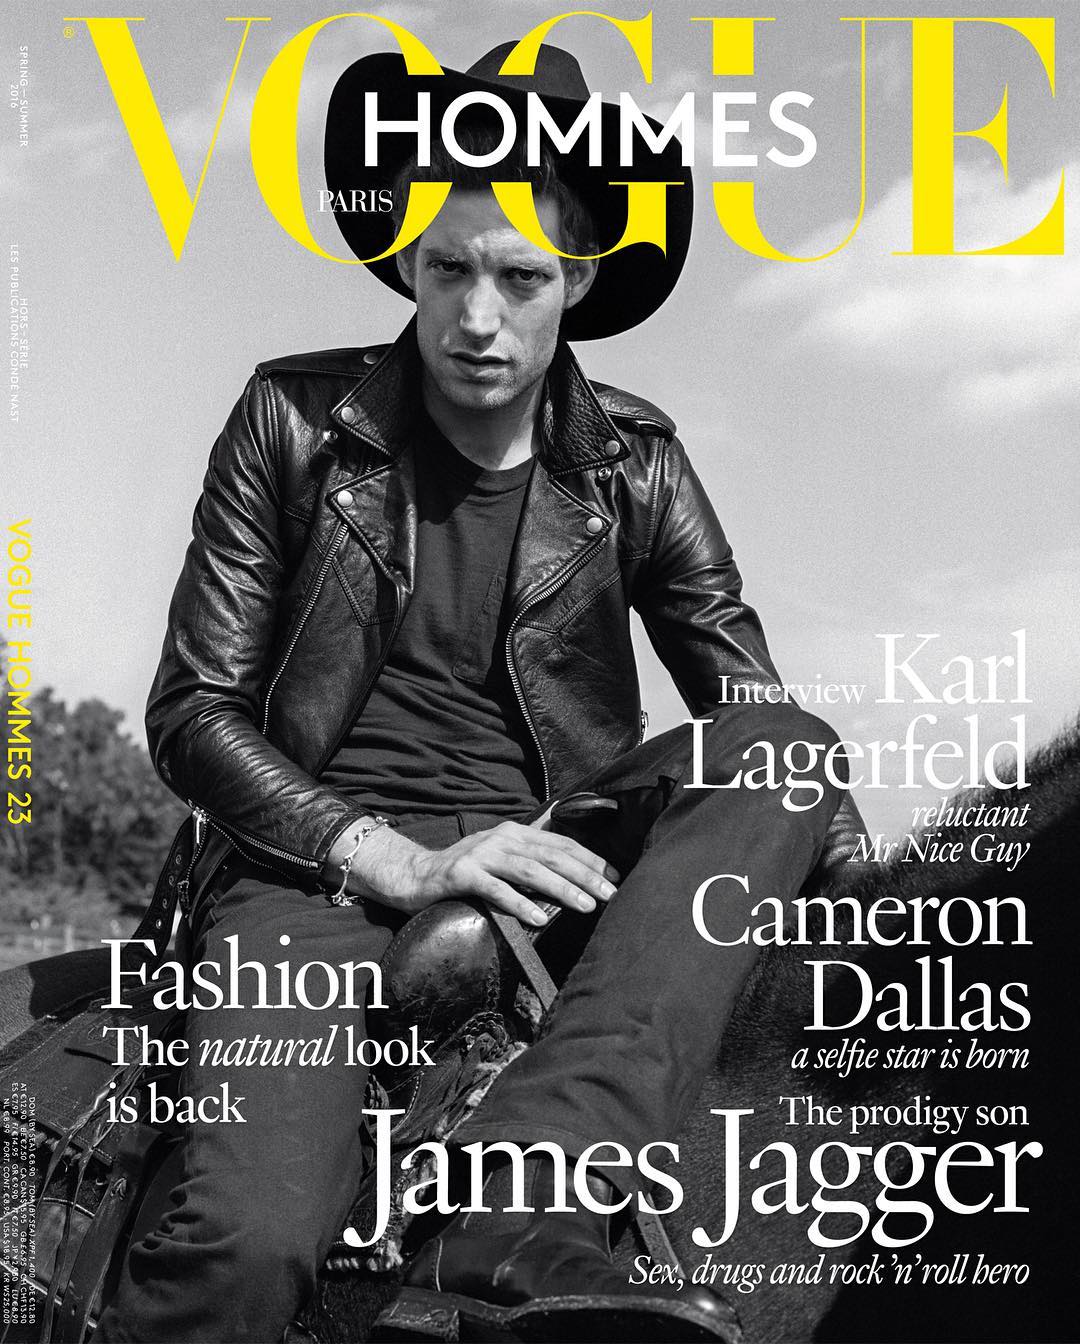 Vogue Hommes Paris Delivers Many Faces for Eclectic Cover 